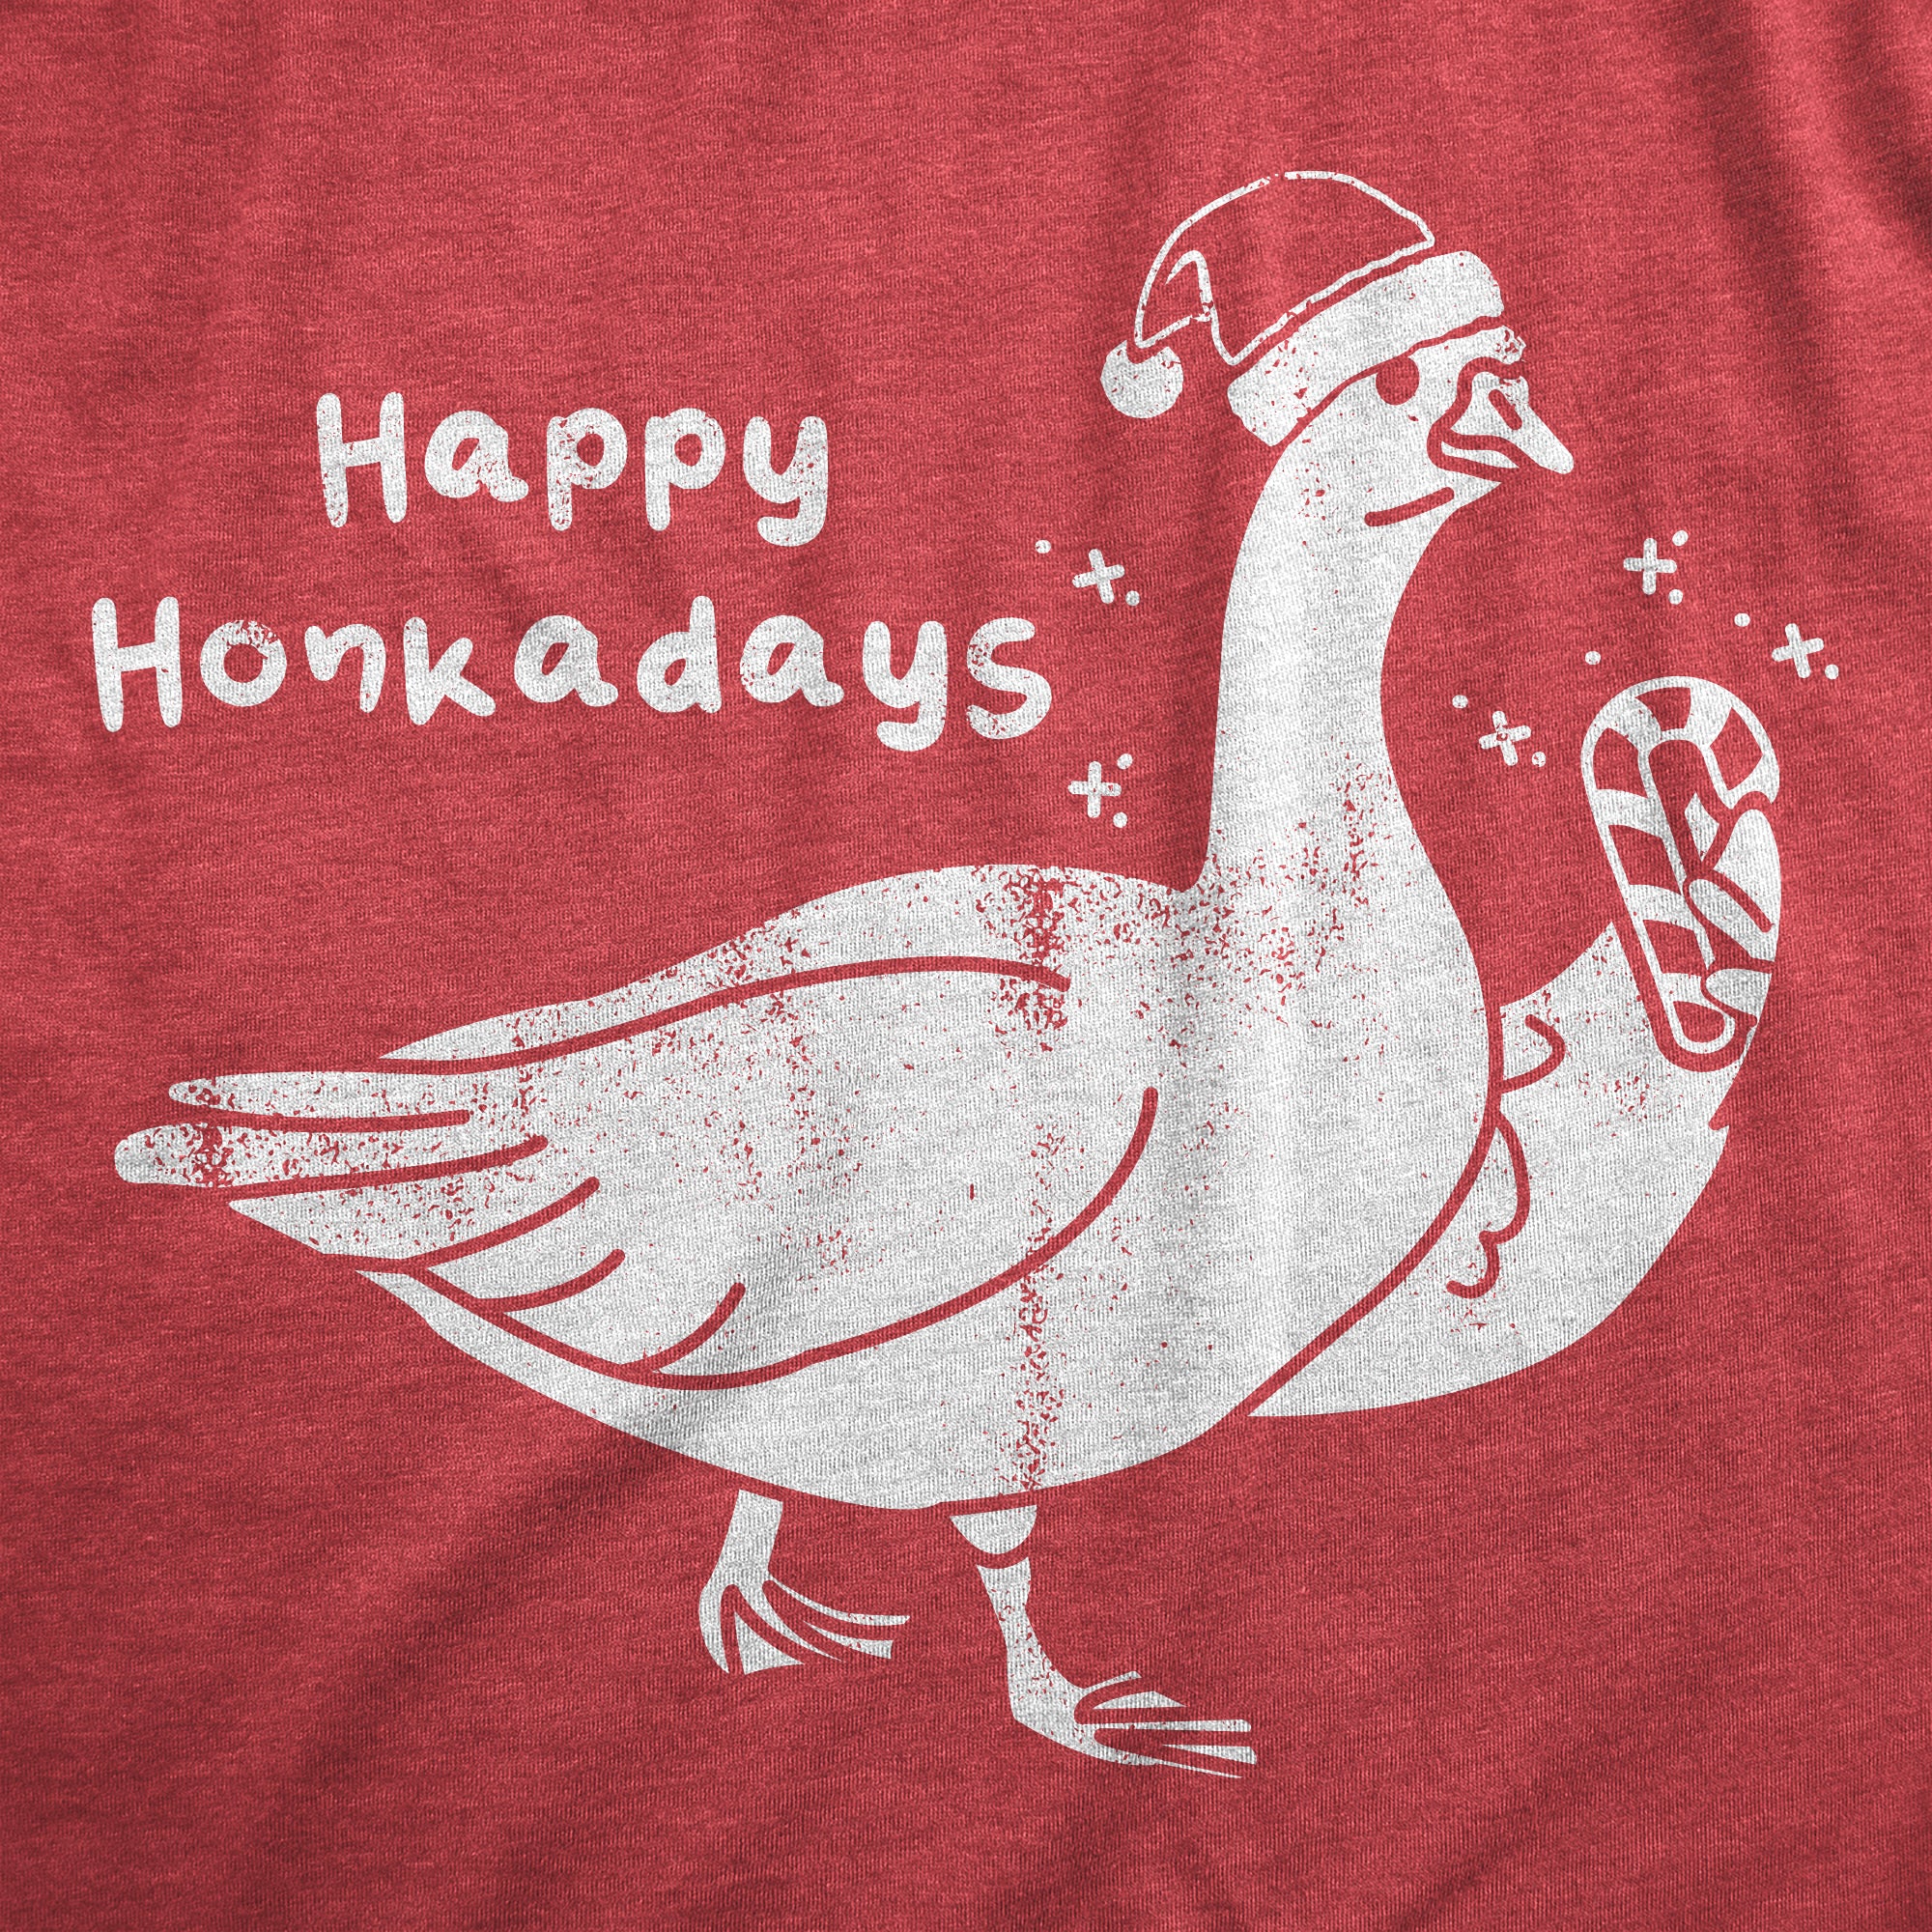 Funny Heather Red - HONKADAYS Happy Honkadays Womens T Shirt Nerdy Christmas animal sarcastic Tee